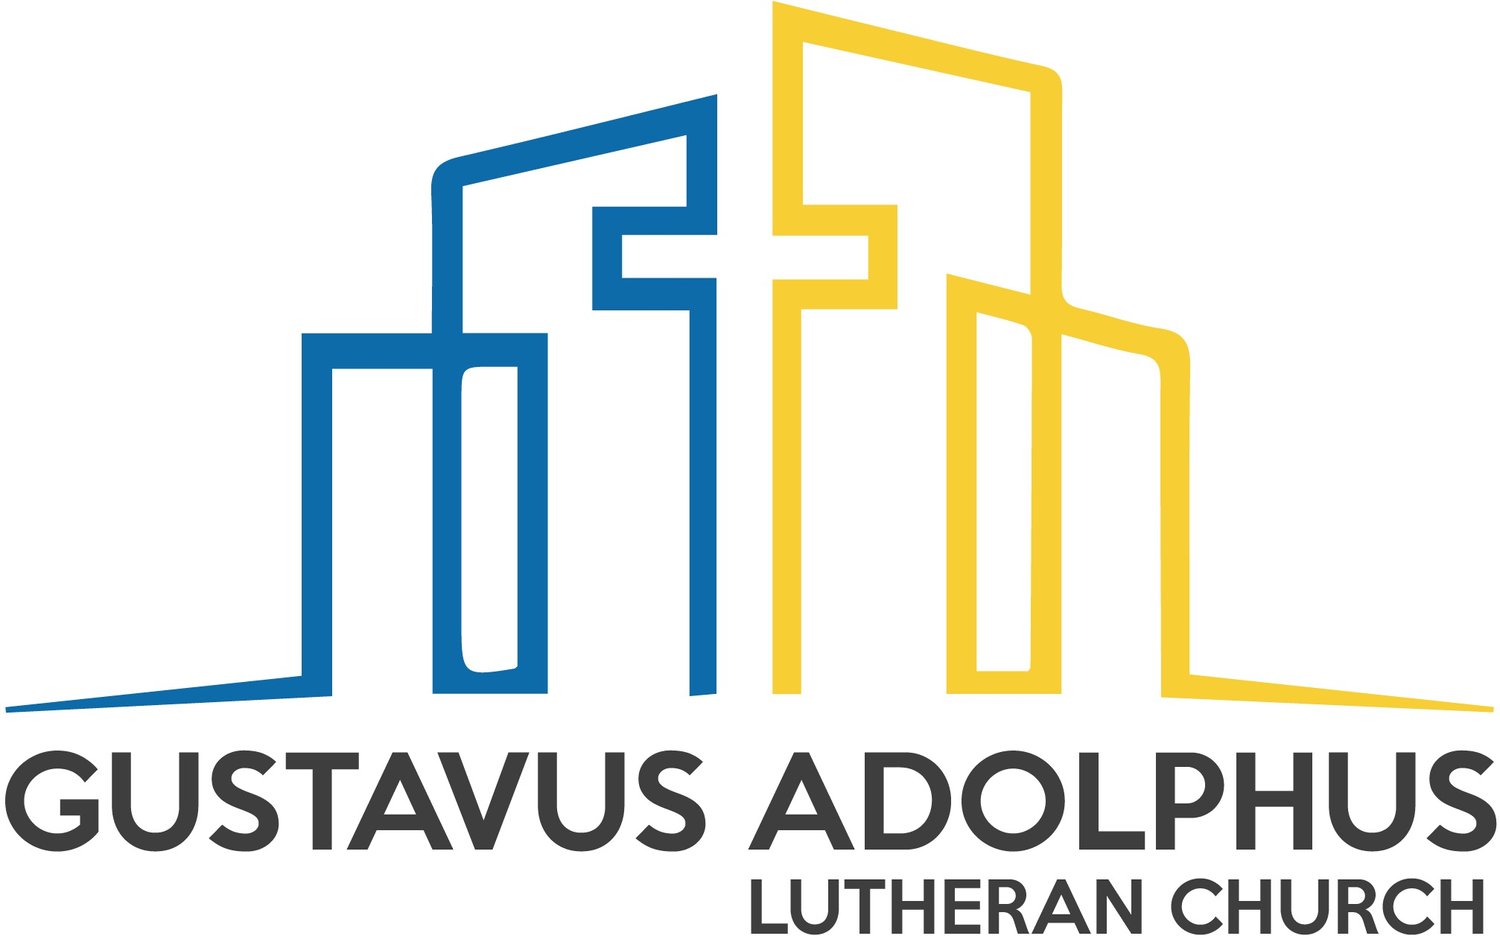 Gustavus Adolphus Lutheran Church